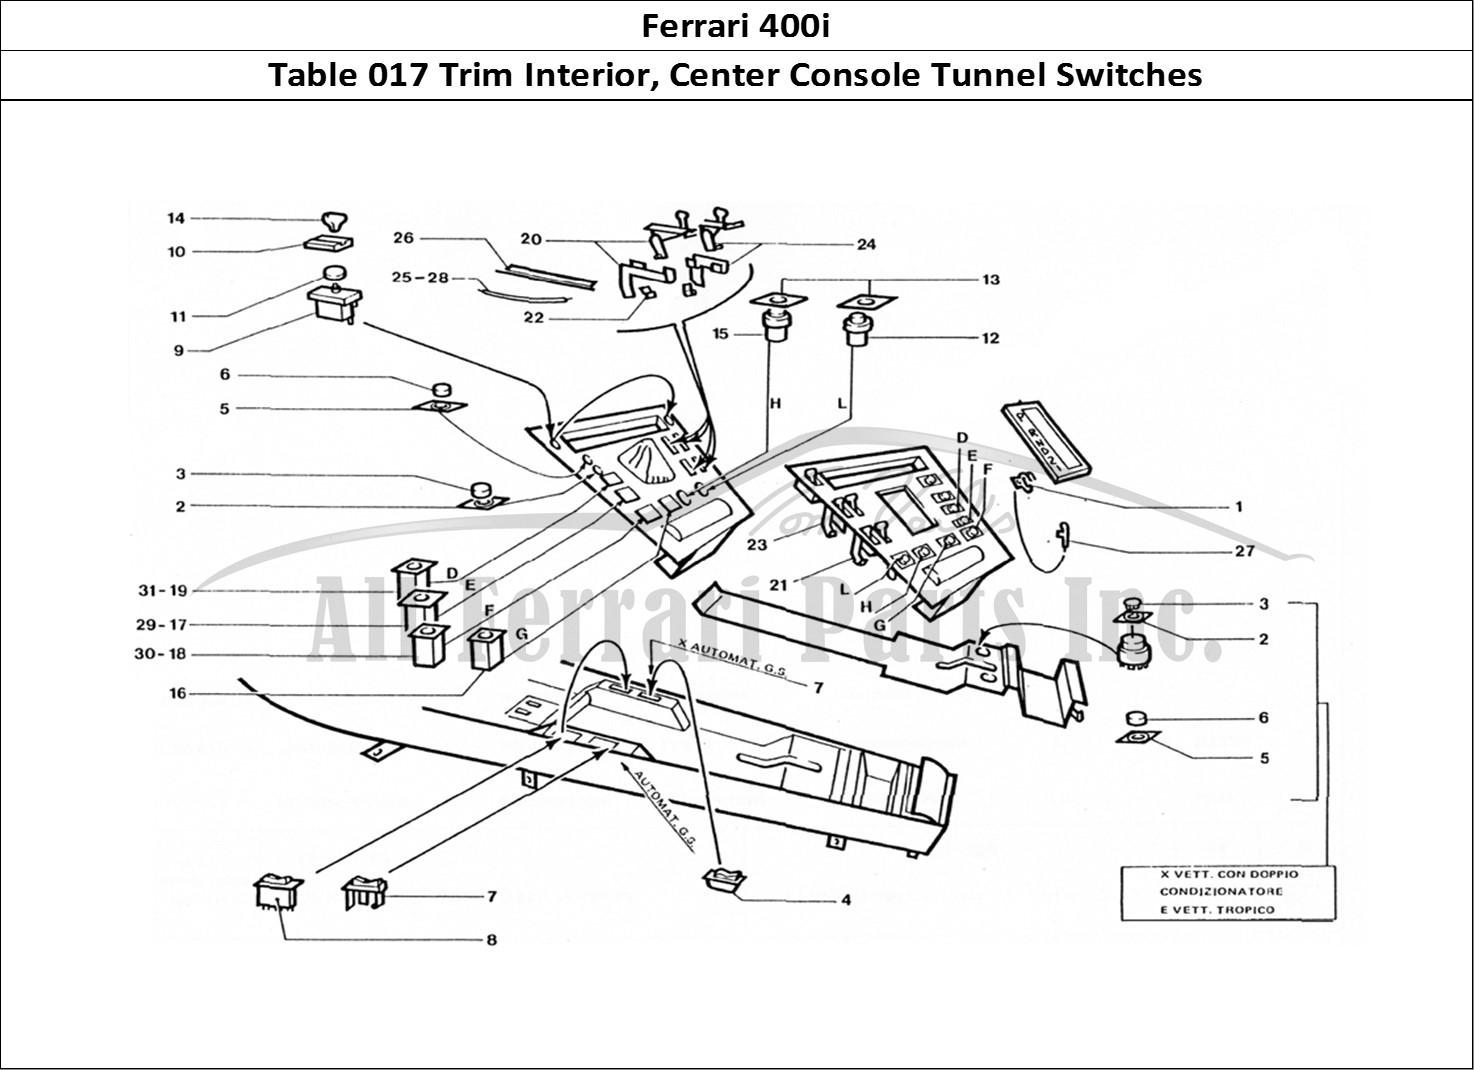 Ferrari Parts Ferrari 400 GT (Coachwork) Page 017 Inner center console swit